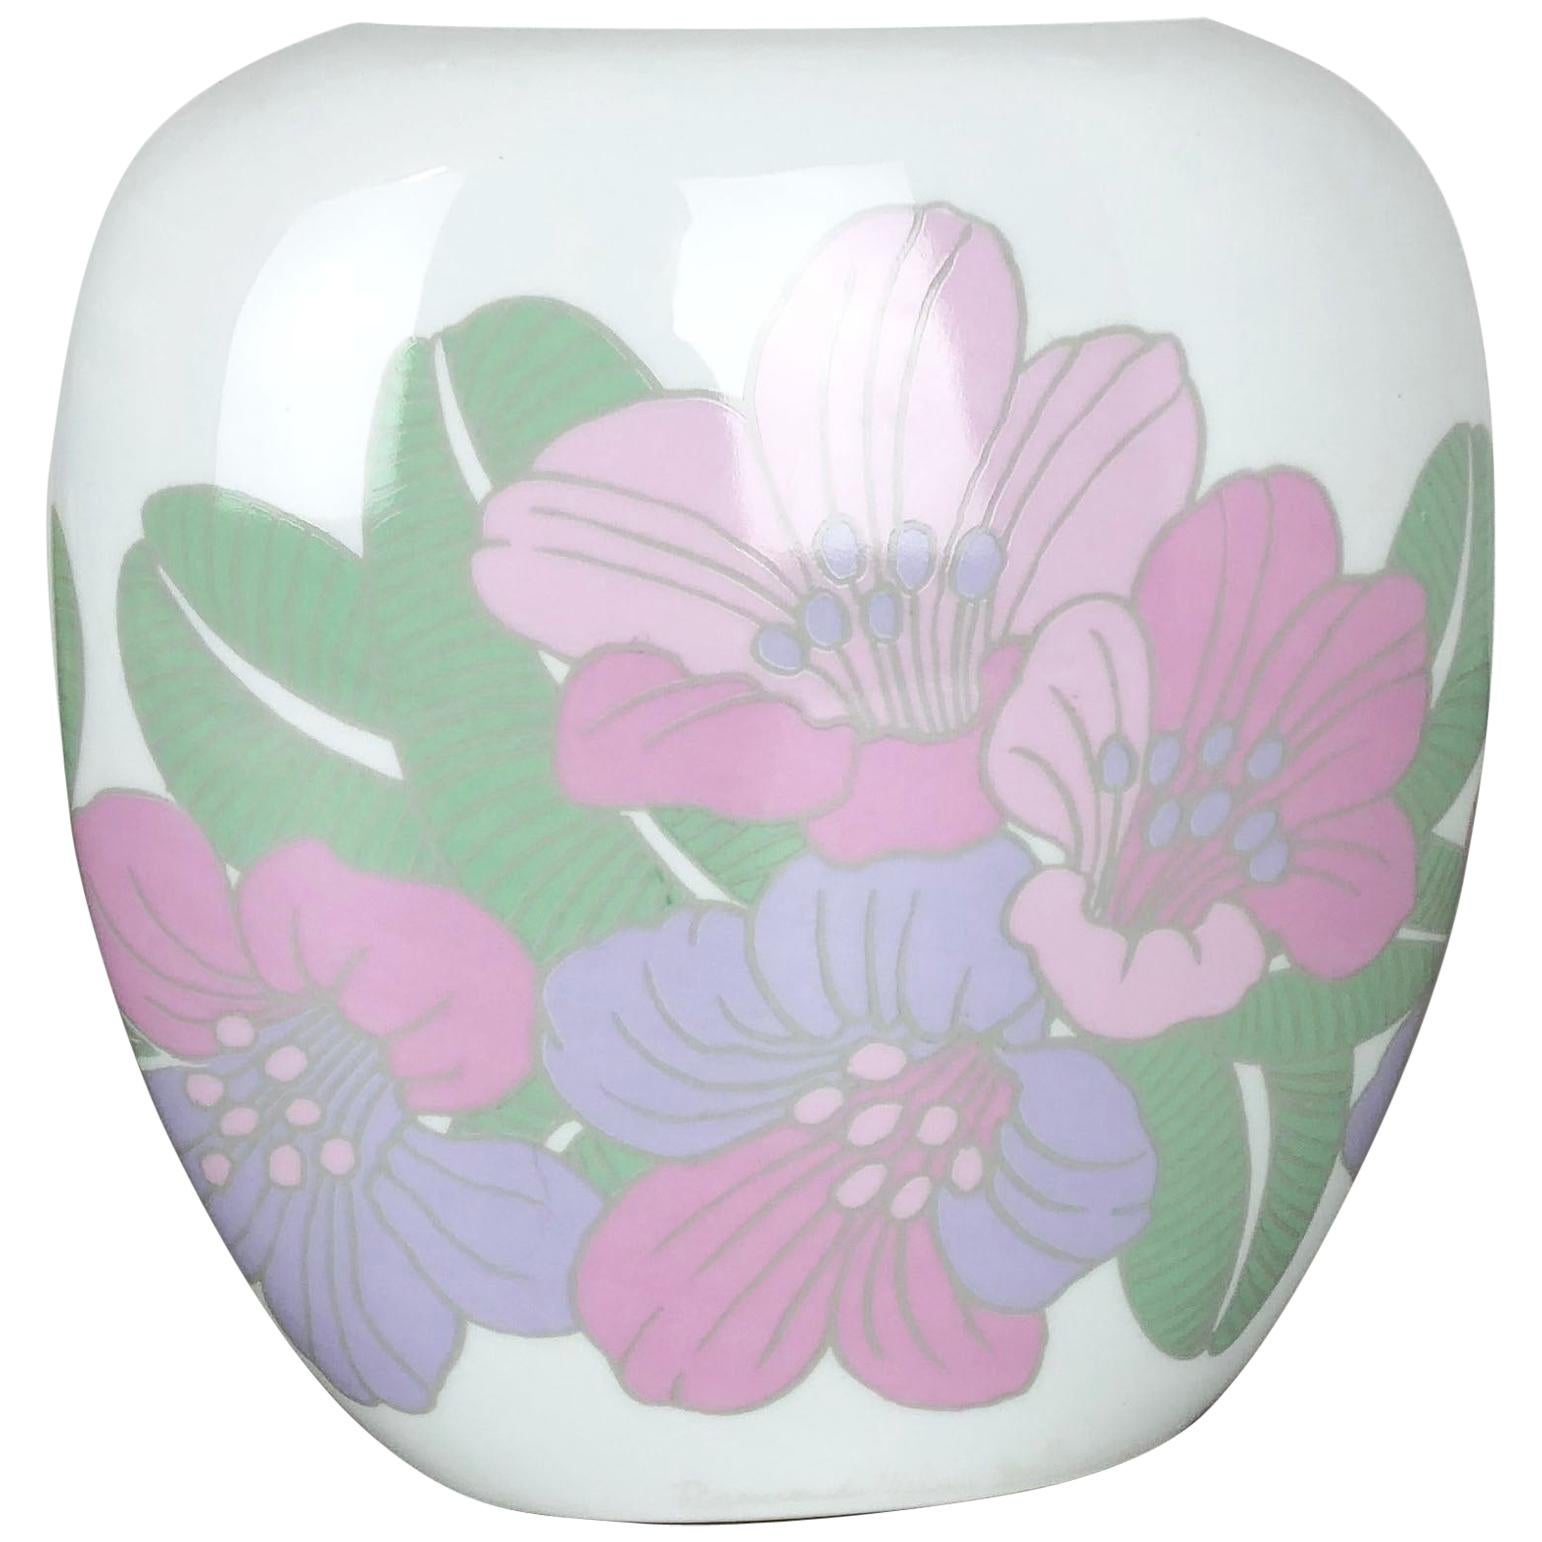 Colorful 1970s Art Vase Porcelain Vase Rosemonde Nairac for Rosenthal Germany